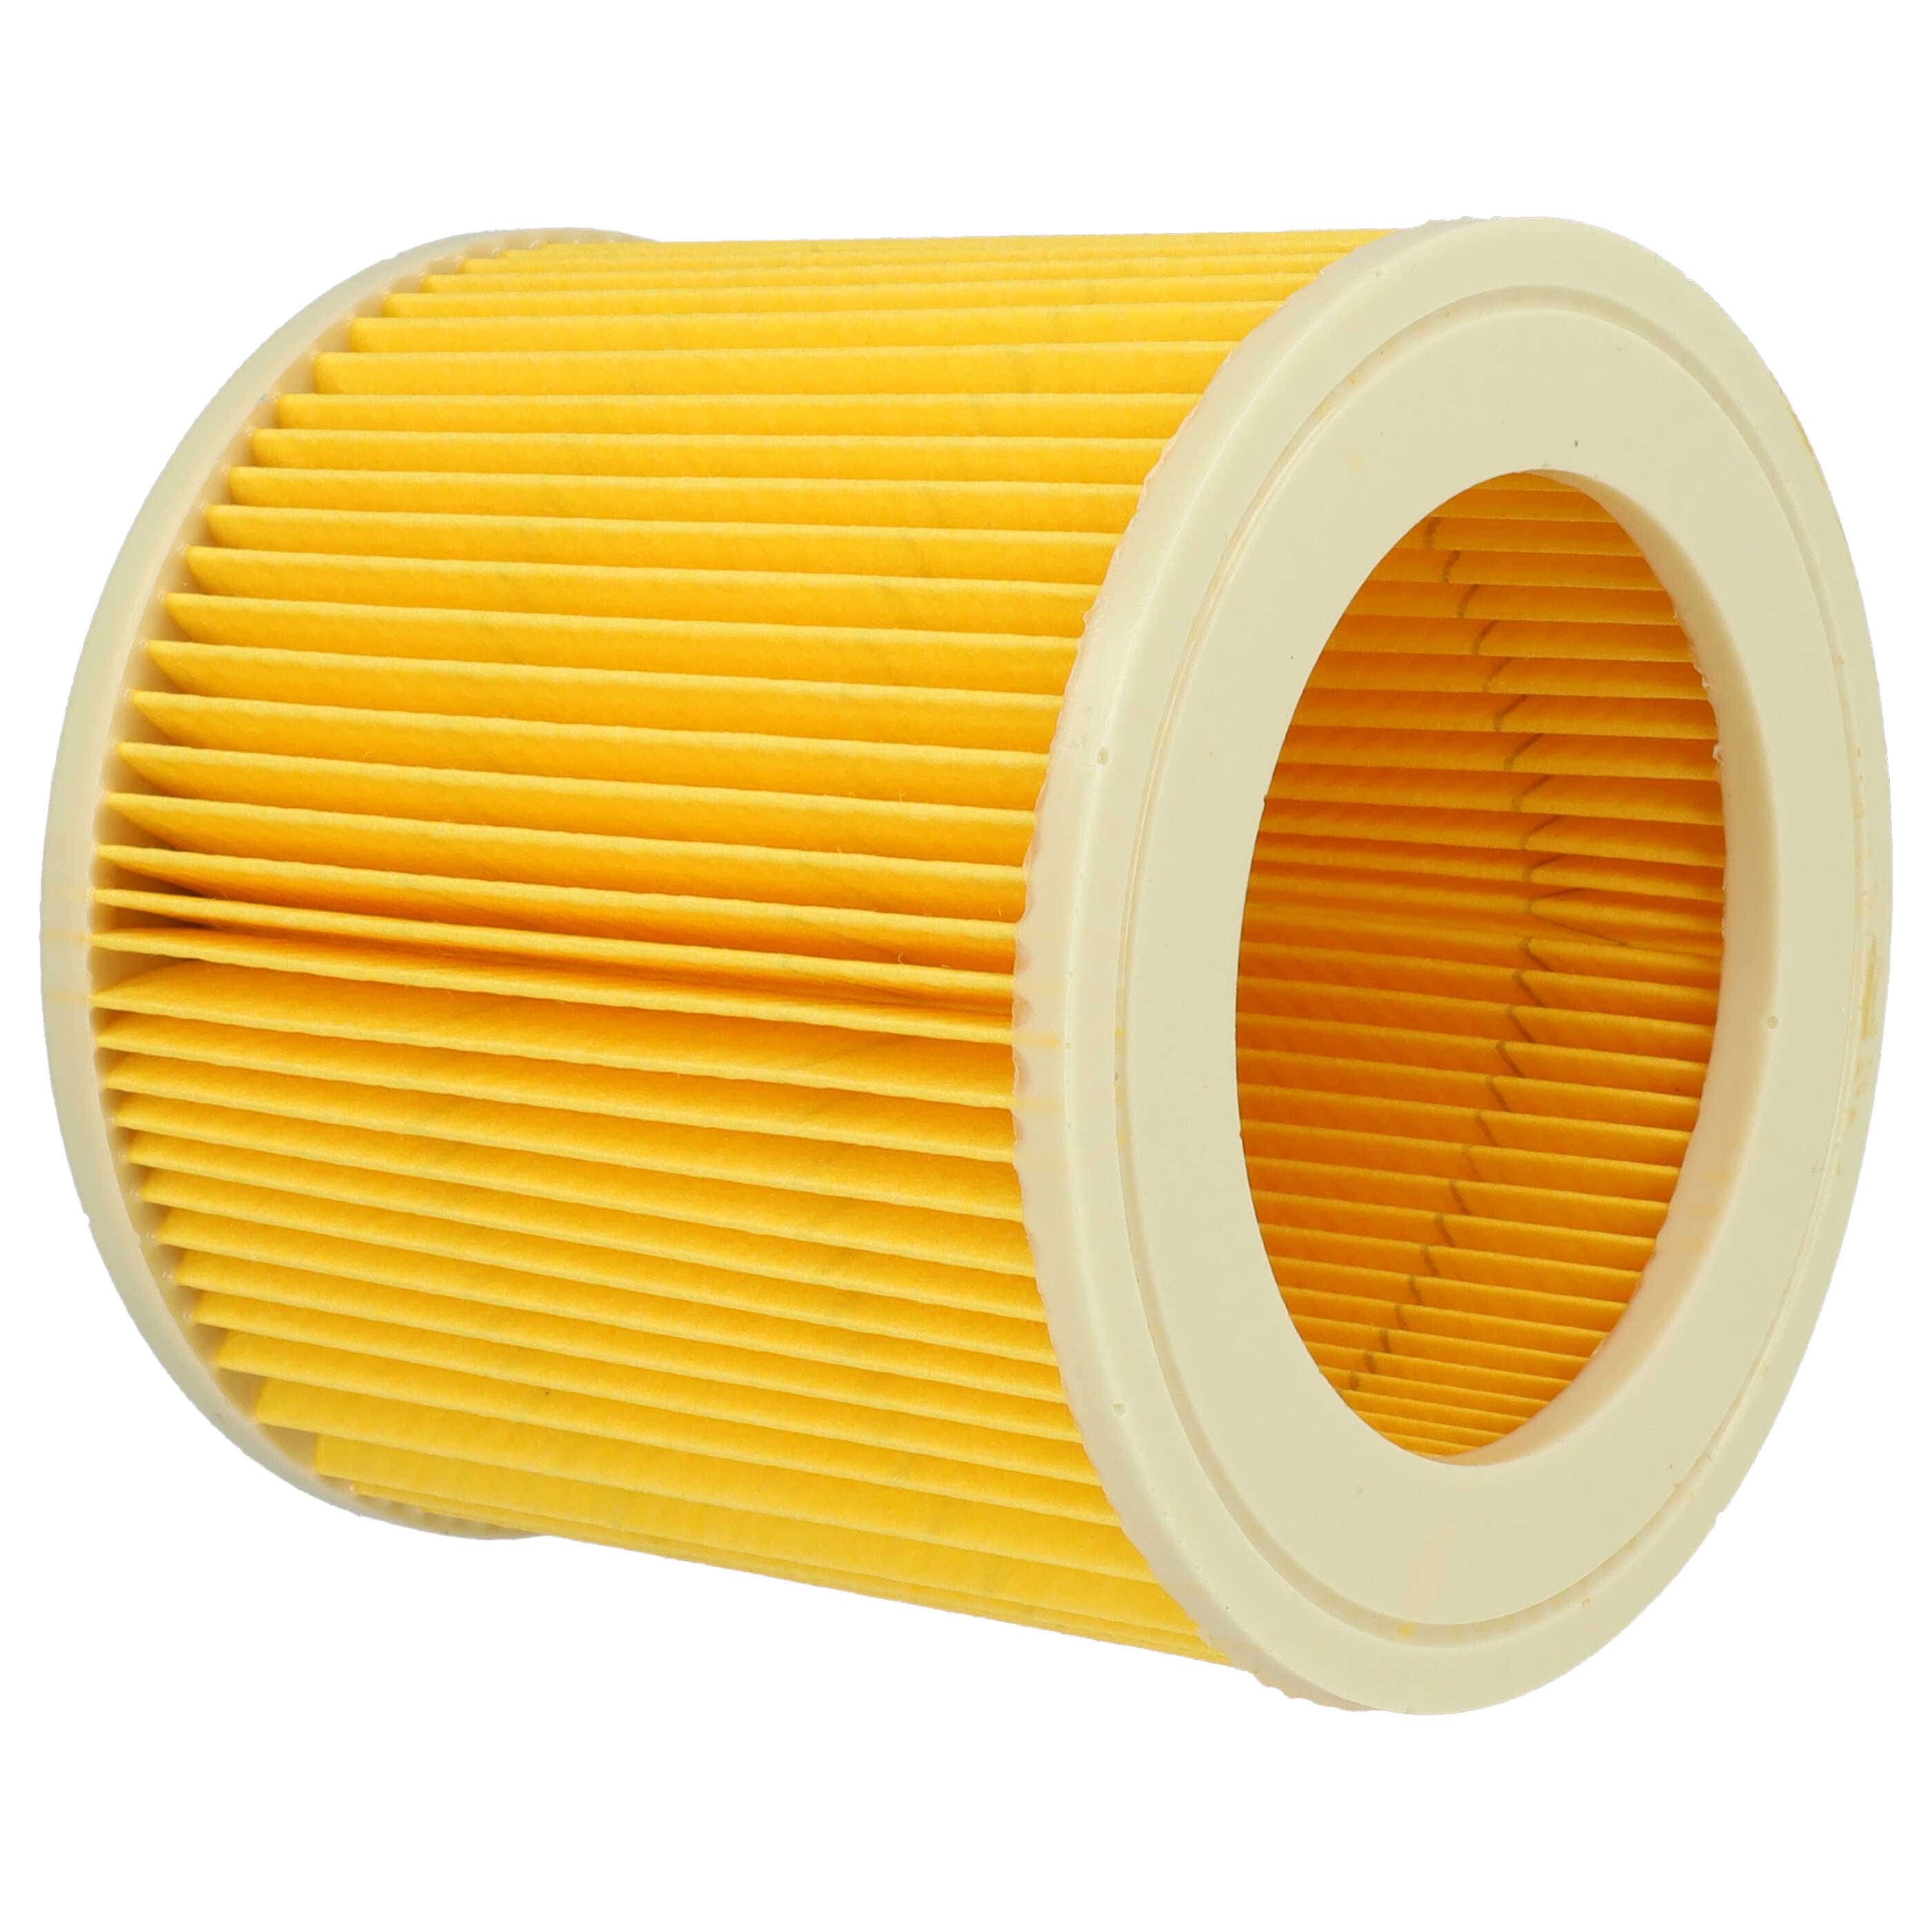 3x Filtro reemplaza Kärcher 2.863-303.0, 6.414-547.0 para aspiradora - filtro de cartucho, amarillo